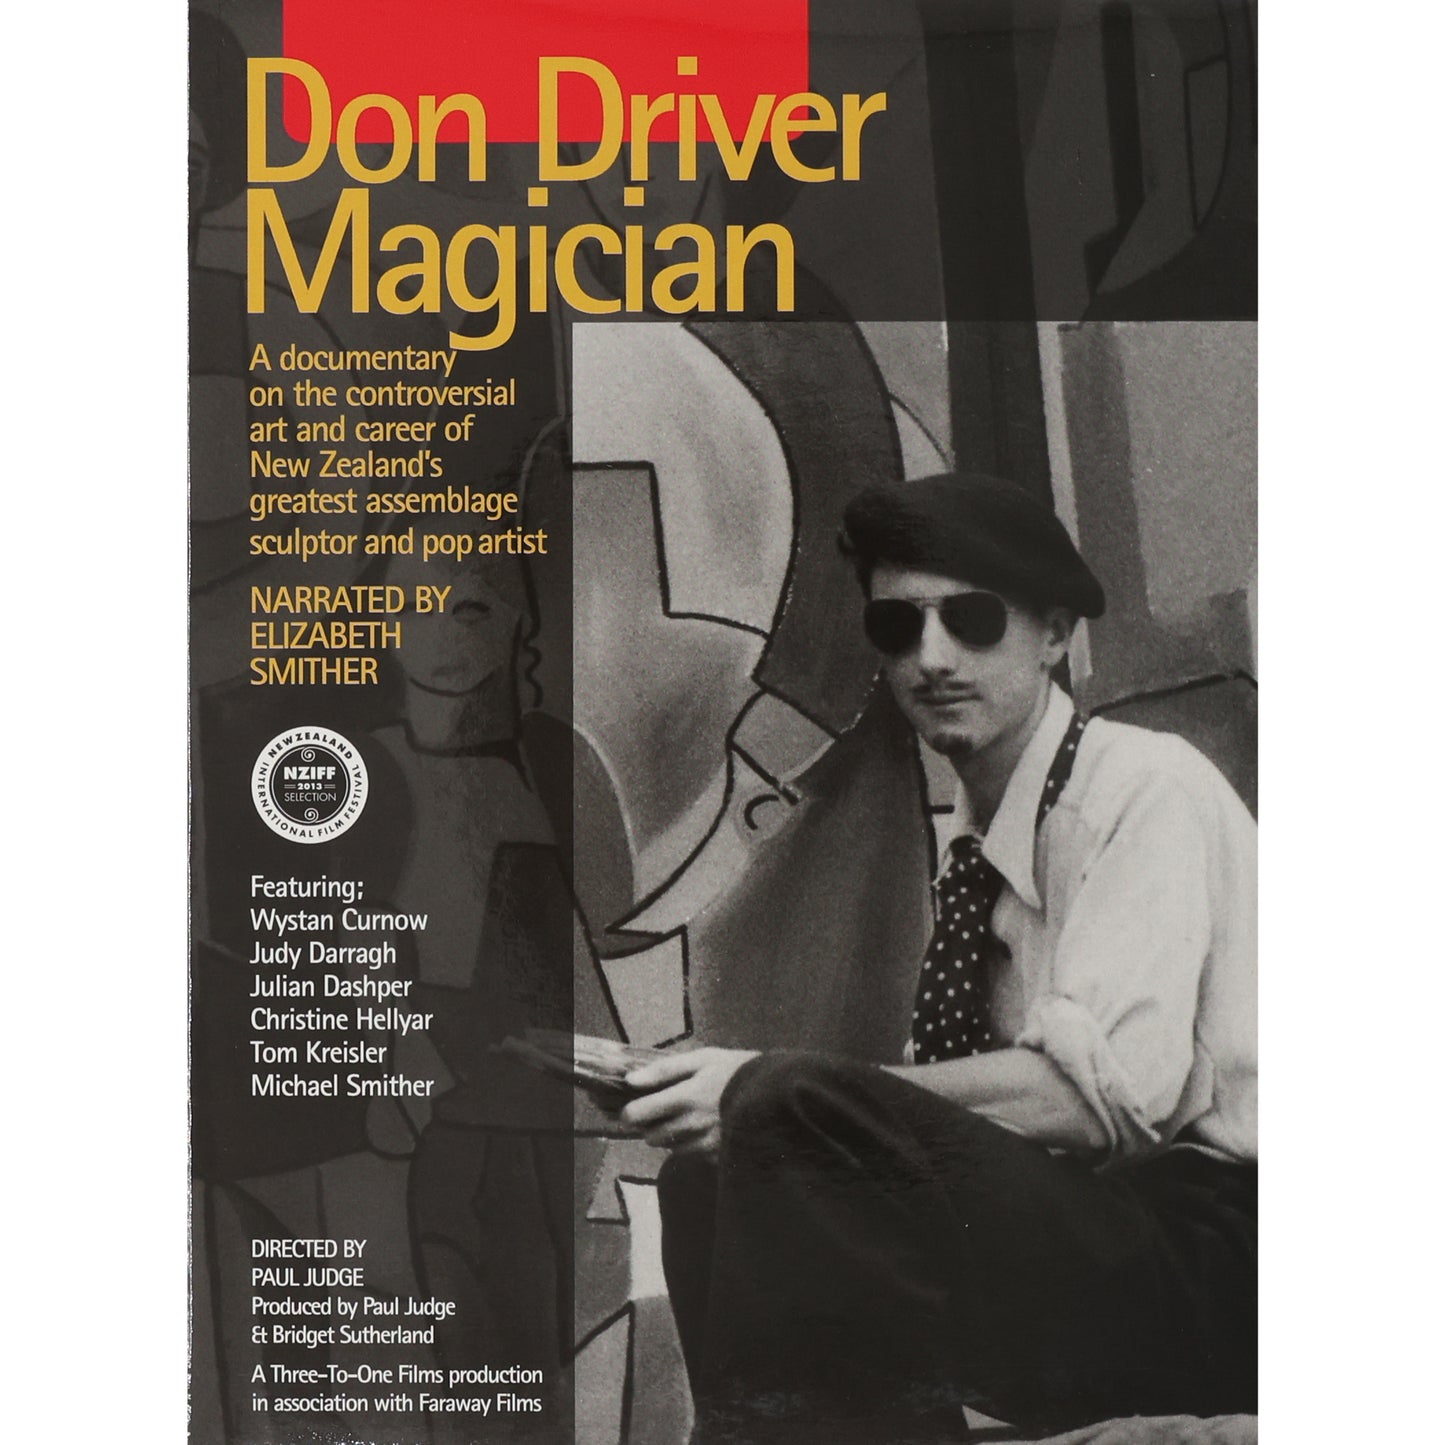 Don Driver: Magician